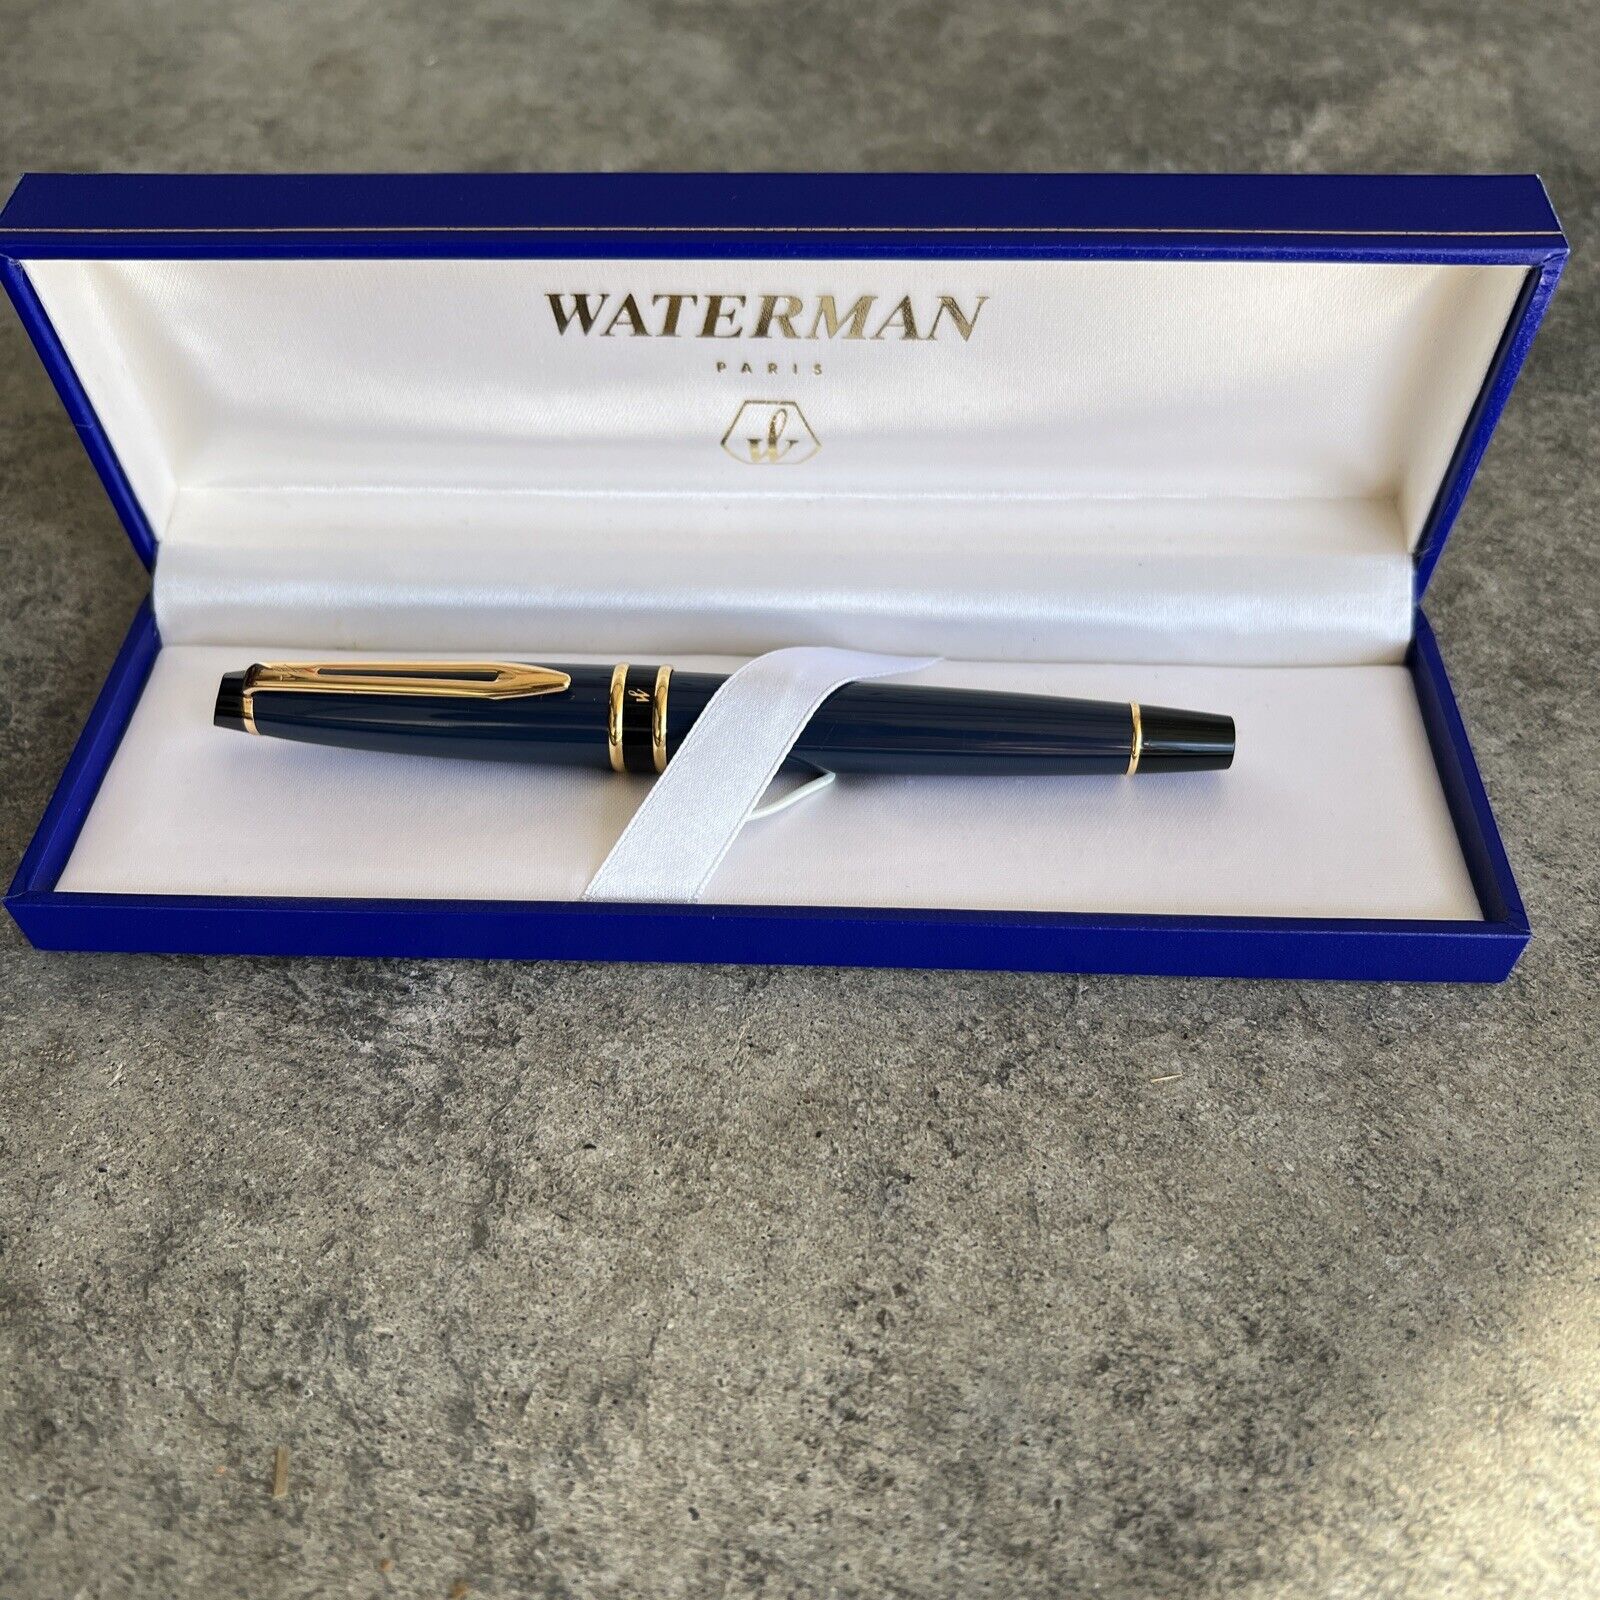 Waterman Paris Expert II Ballpoint Pen Blue & Gold  In Box Original